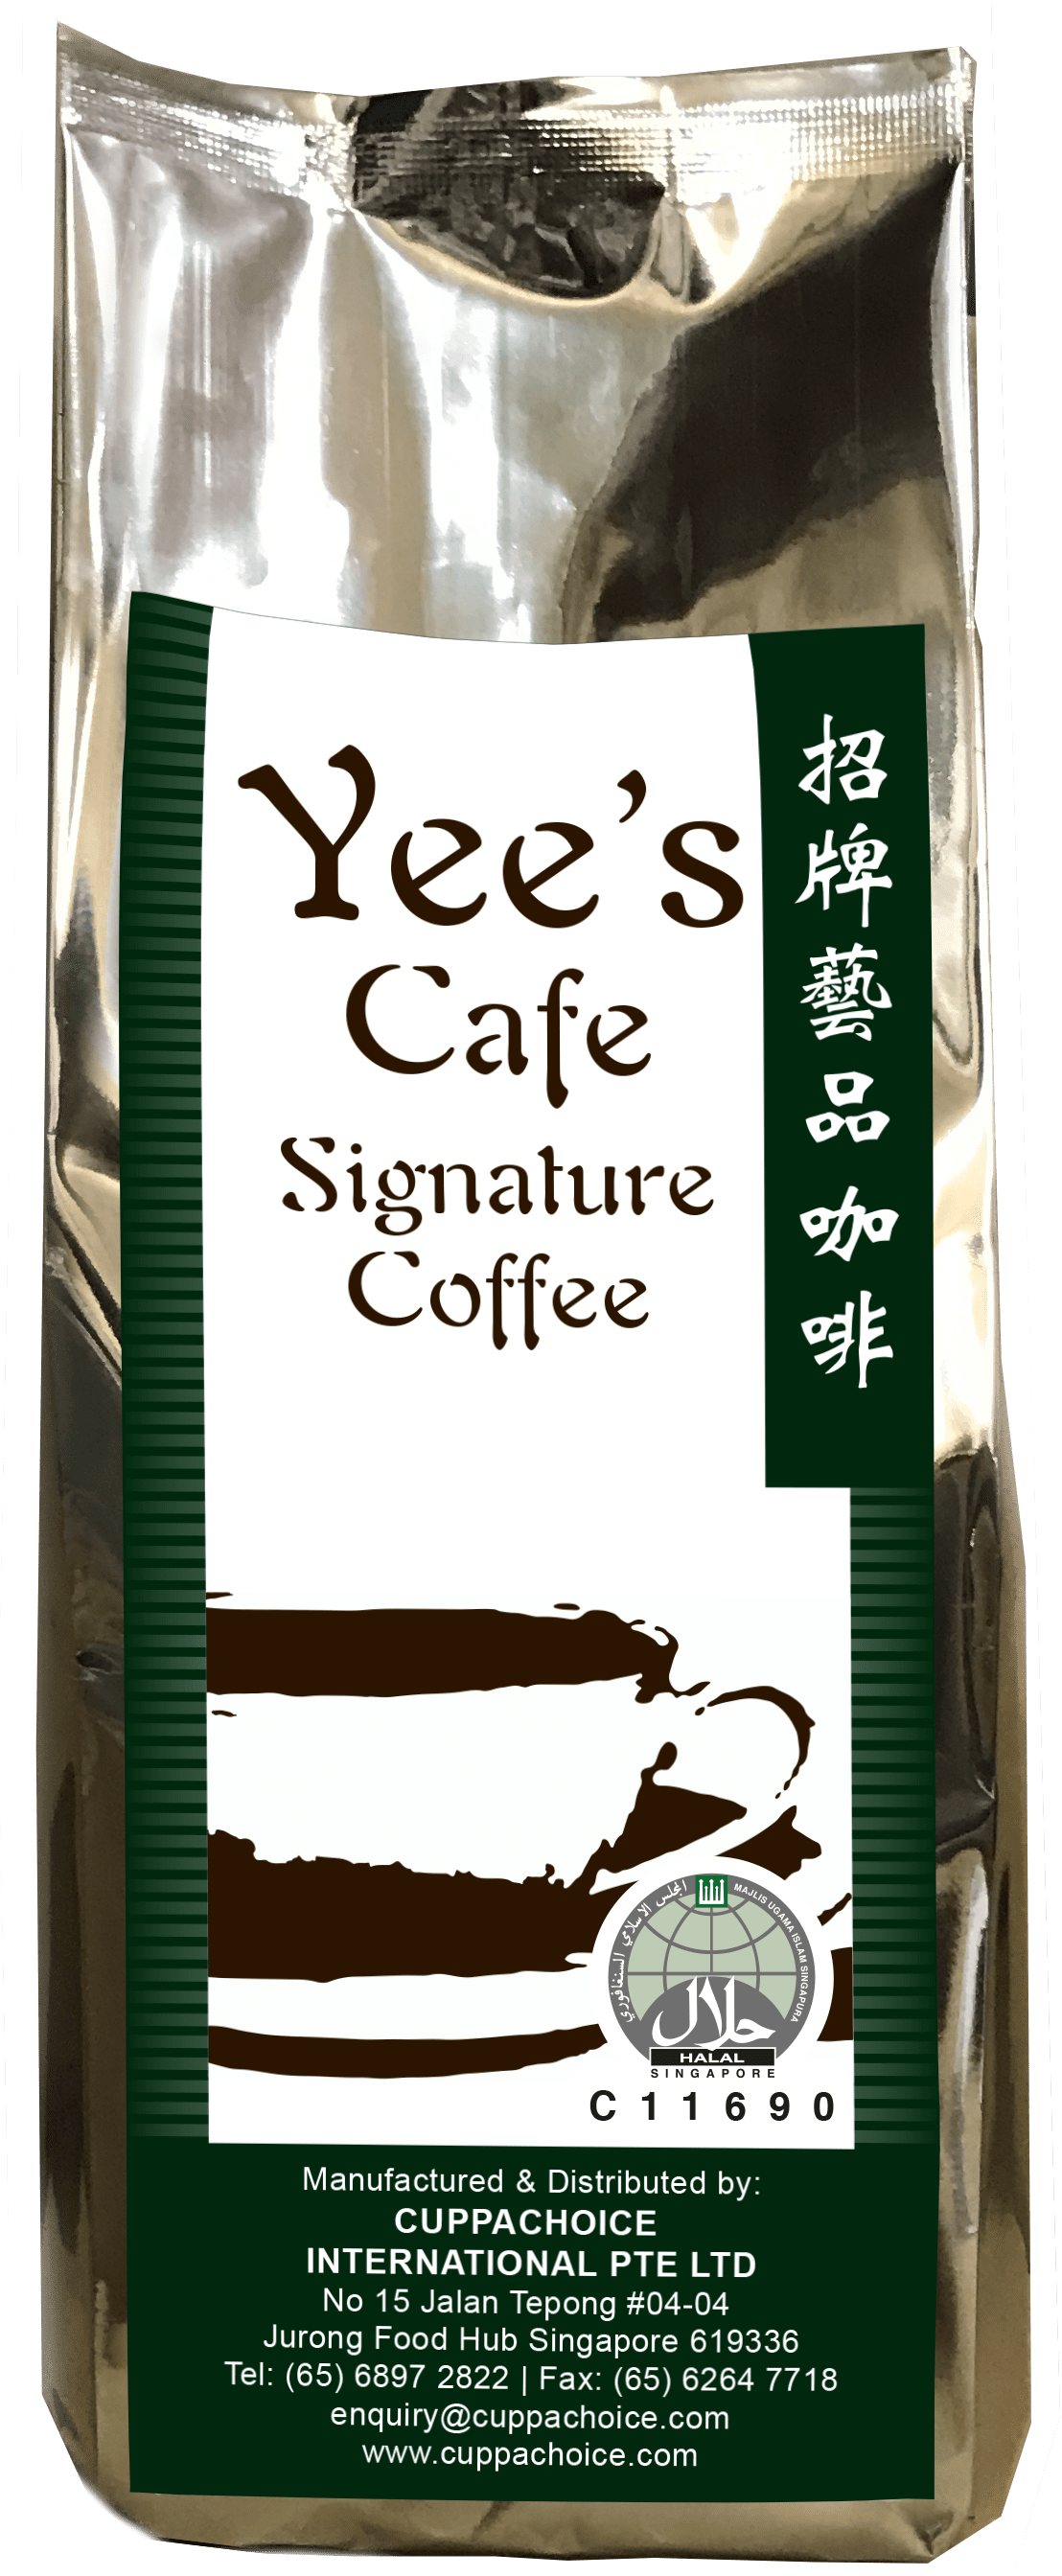 Yee's Cafe Signature Coffee